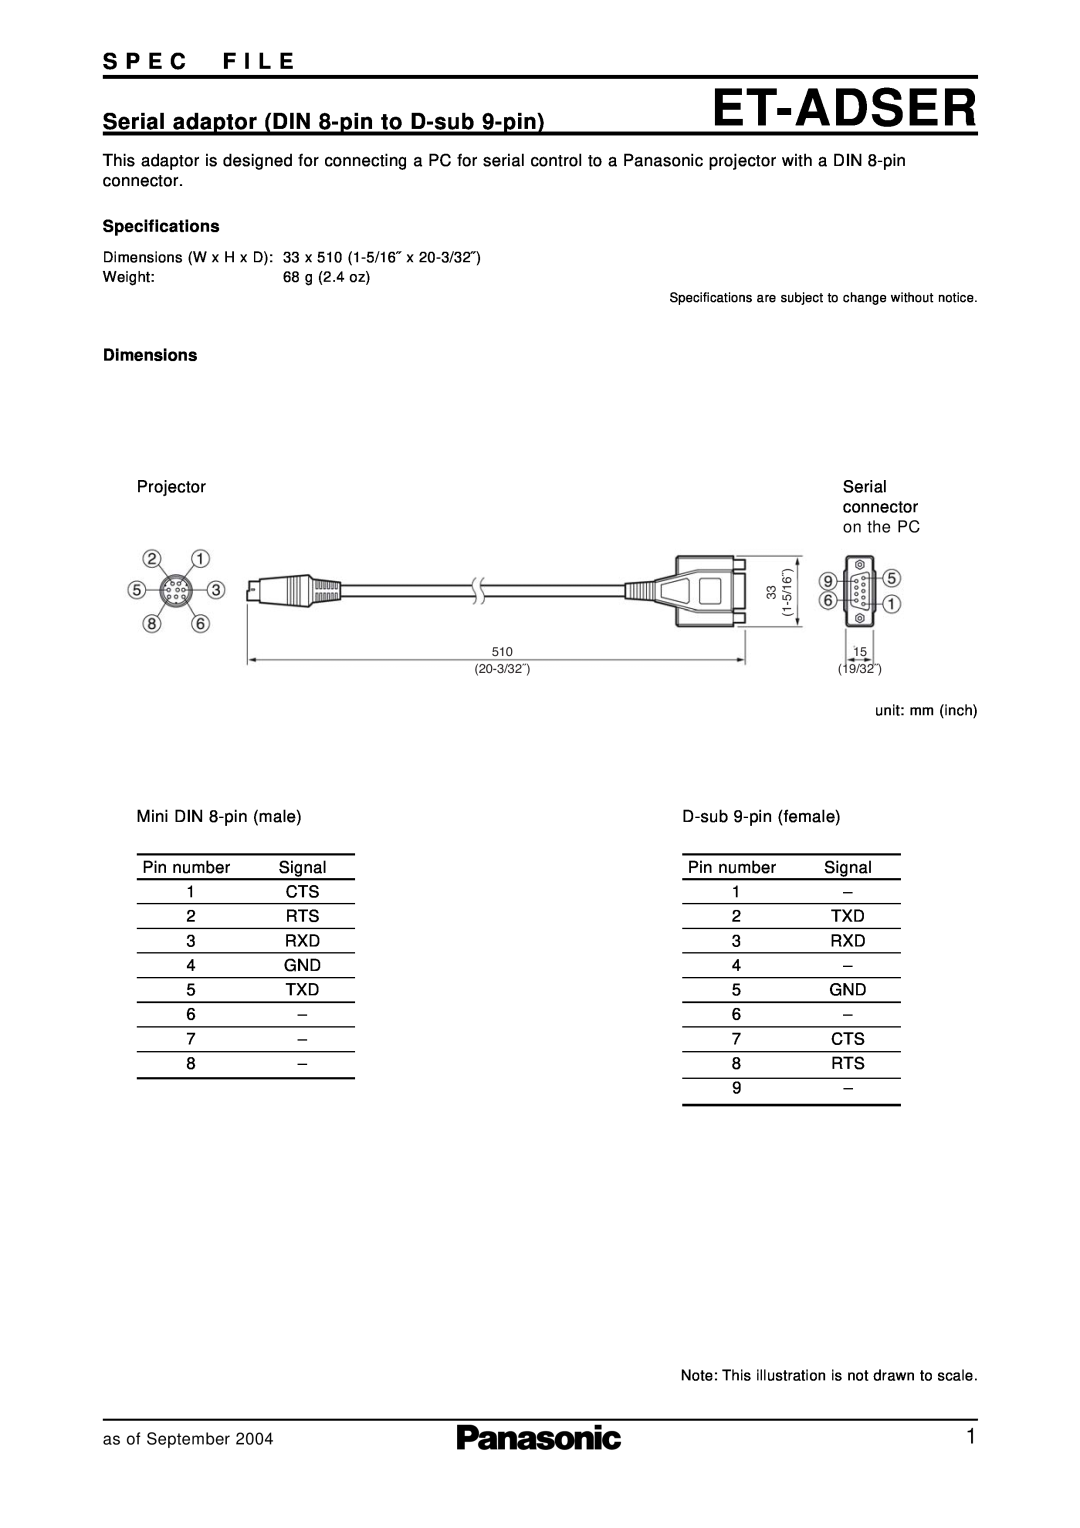 Panasonic et-adser specifications Et-Adser, S P E C F I L E, Serial adaptor DIN 8-pin to D-sub 9-pin, Specifications 